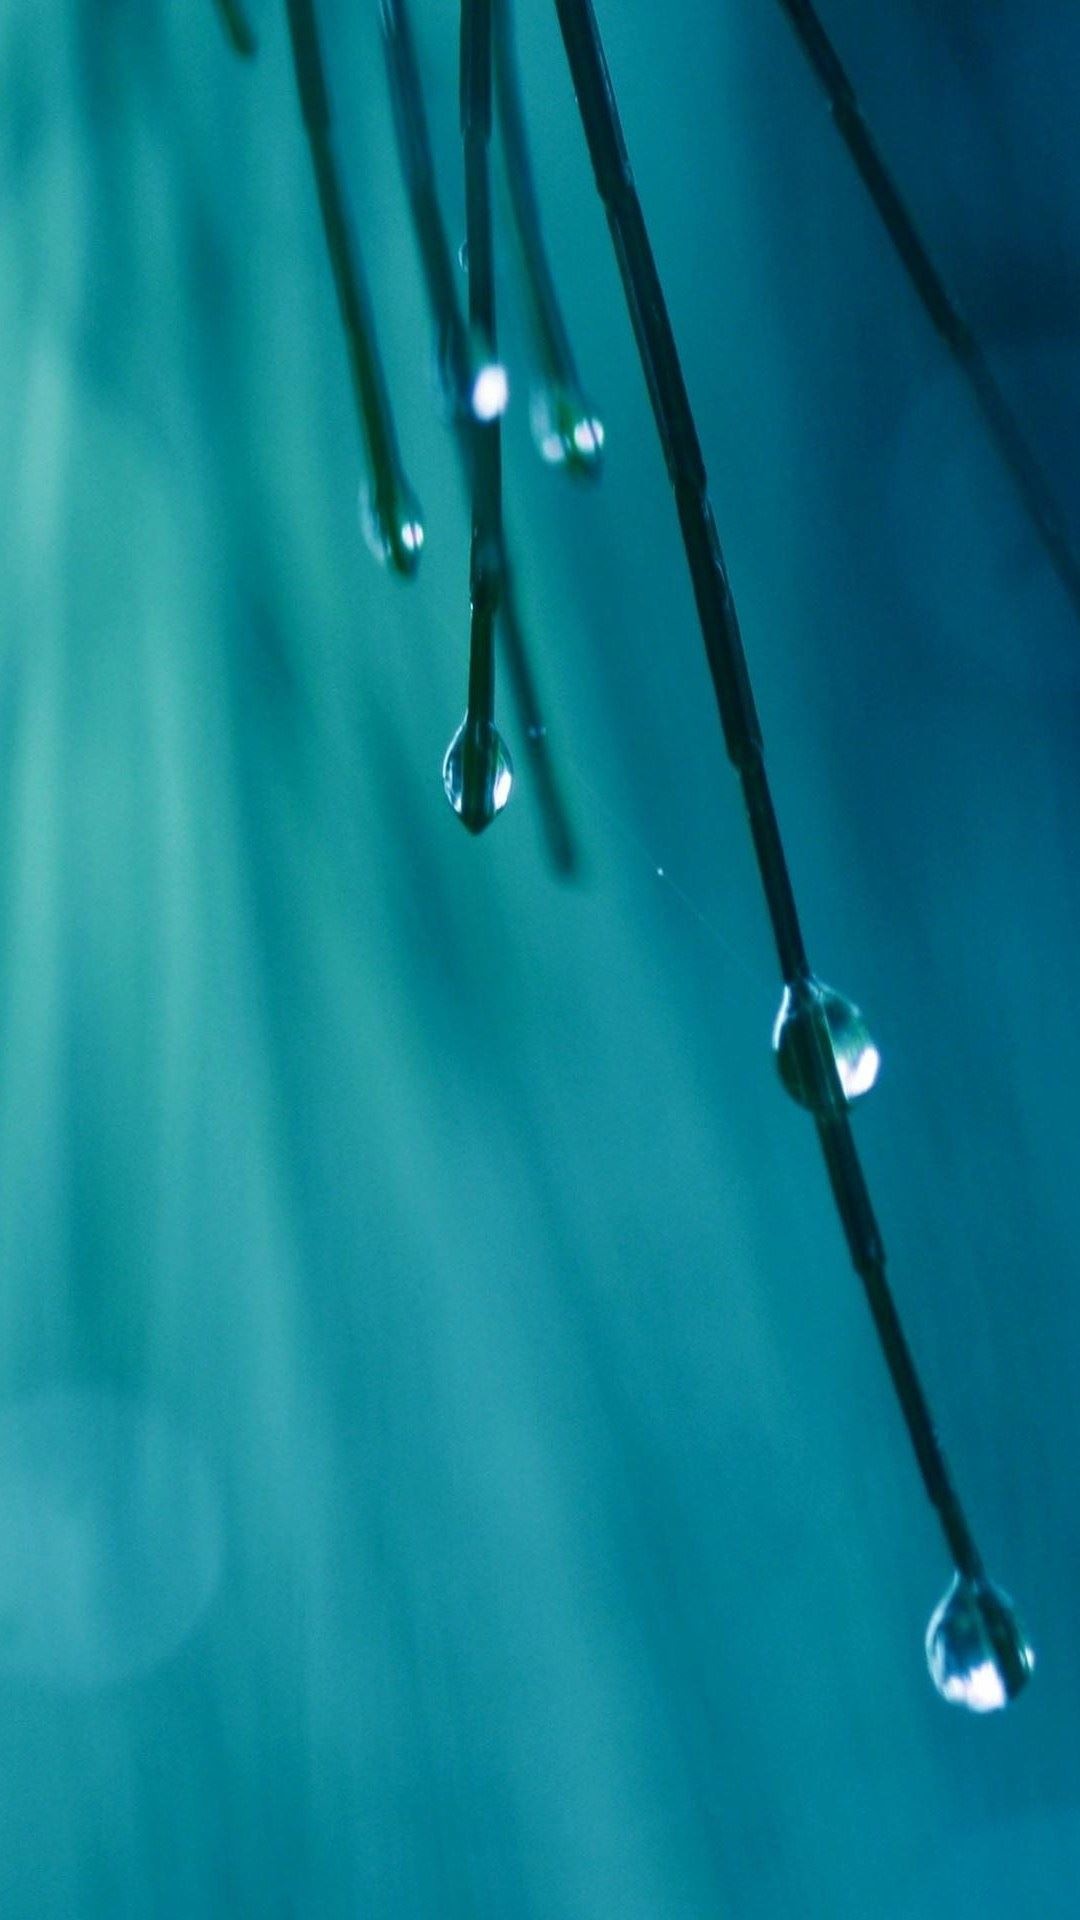 1080x1920 Grass Threads Water Drops iPhone 6 Plus HD Wallpaper ...